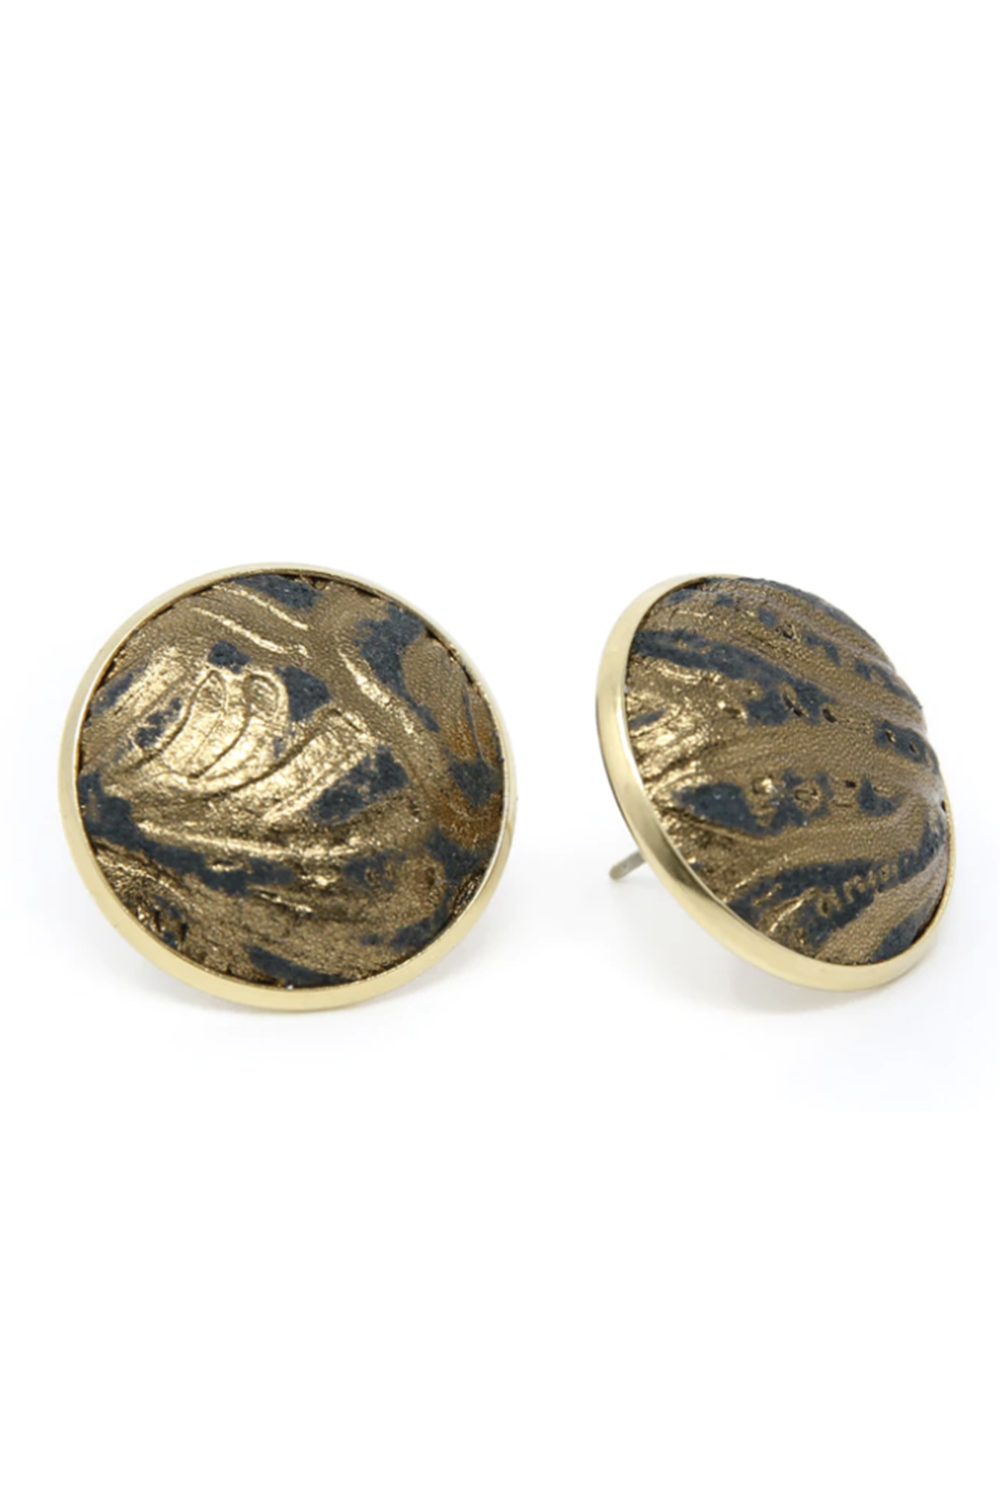 Keva "Full Circle" Button Earring - Black & Bronze Carved